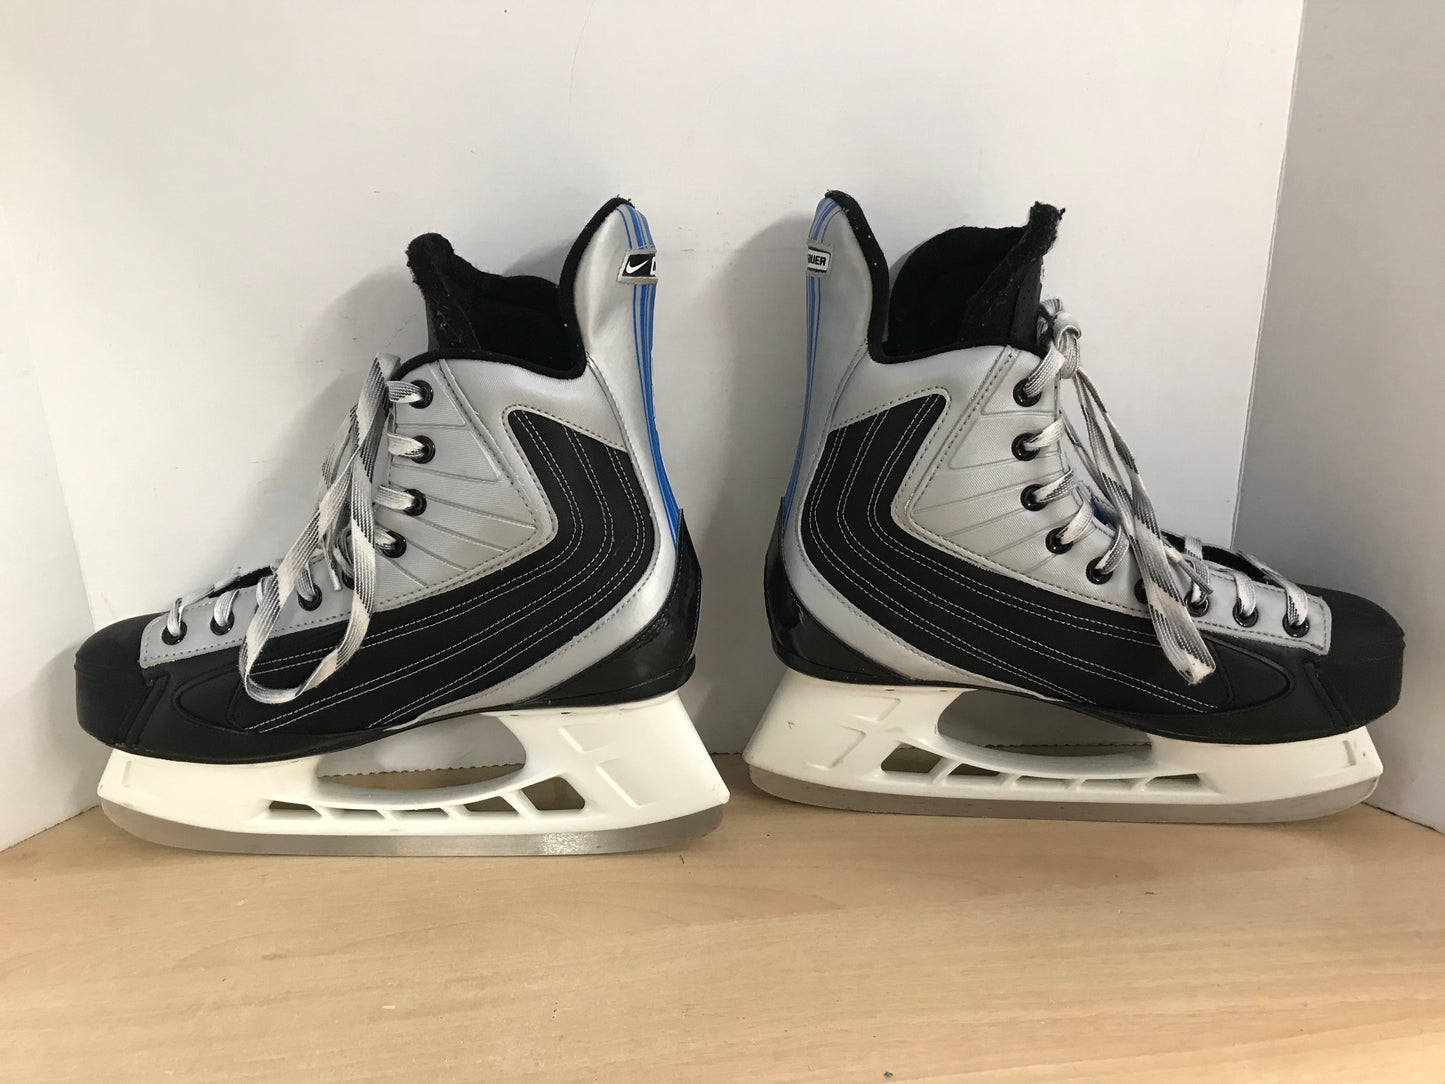 Hockey Skates Men's Size 11.5 R Shoe Size Bauer Nike Excellent